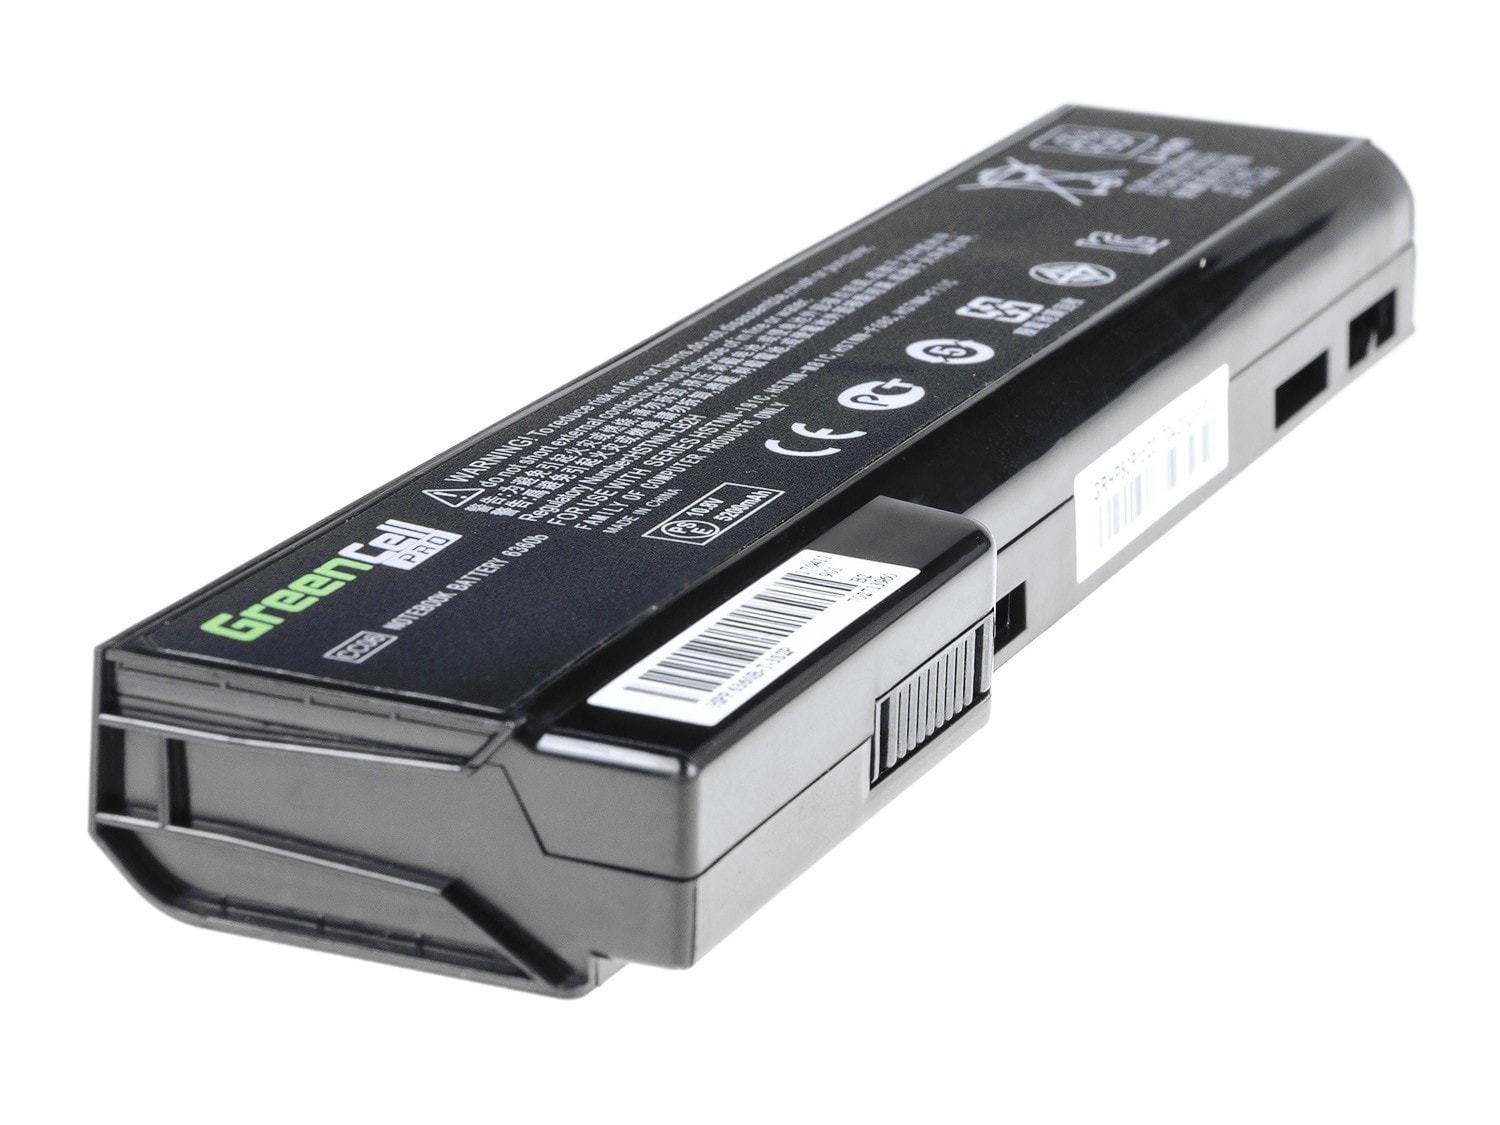 Green Cell PRO laptop batteri til HP EliteBook 8460p ProBook 6360b 6460b